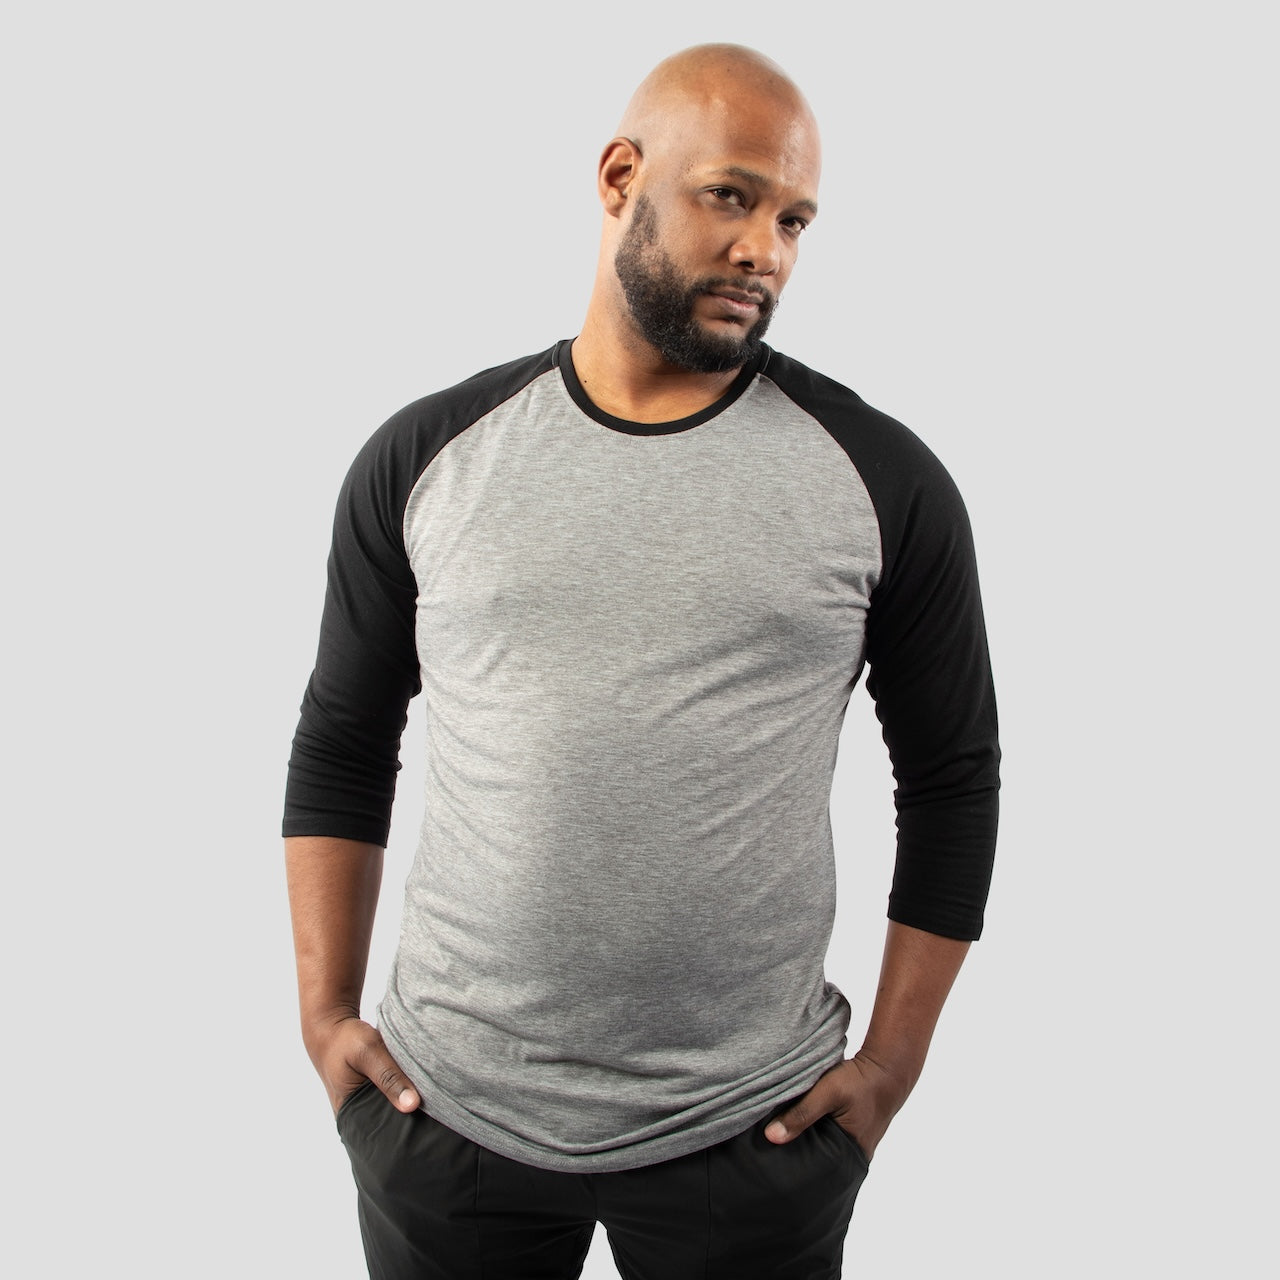 Gray and Black Raglan 3/4 Sleeve Shirt For Tall Slim Men